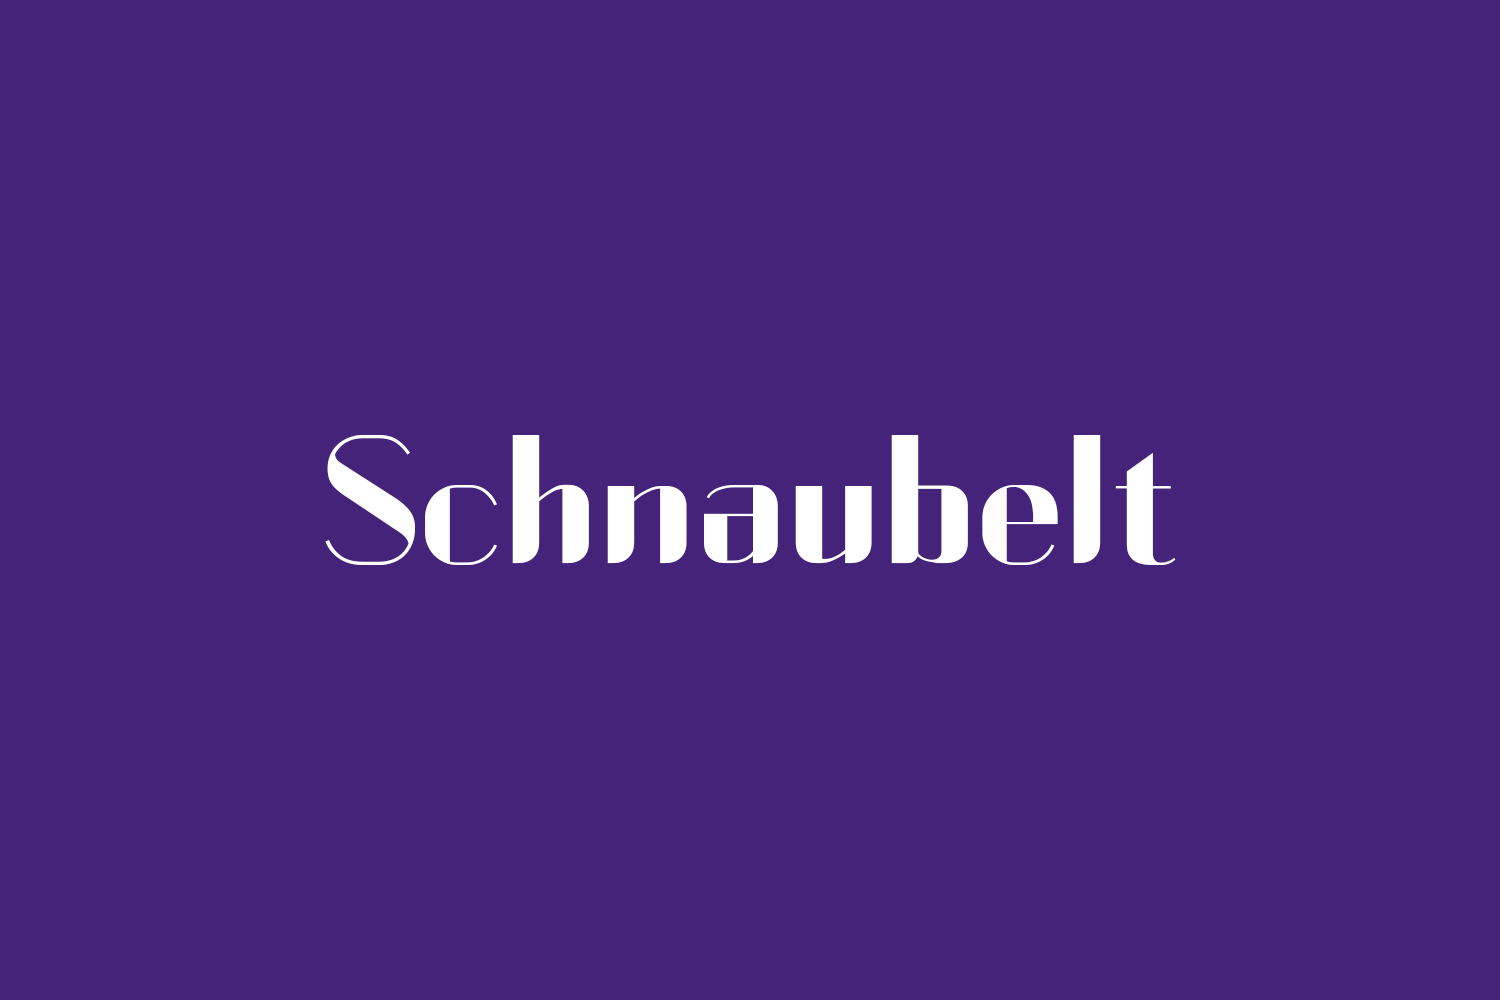 Schnaubelt Free Font